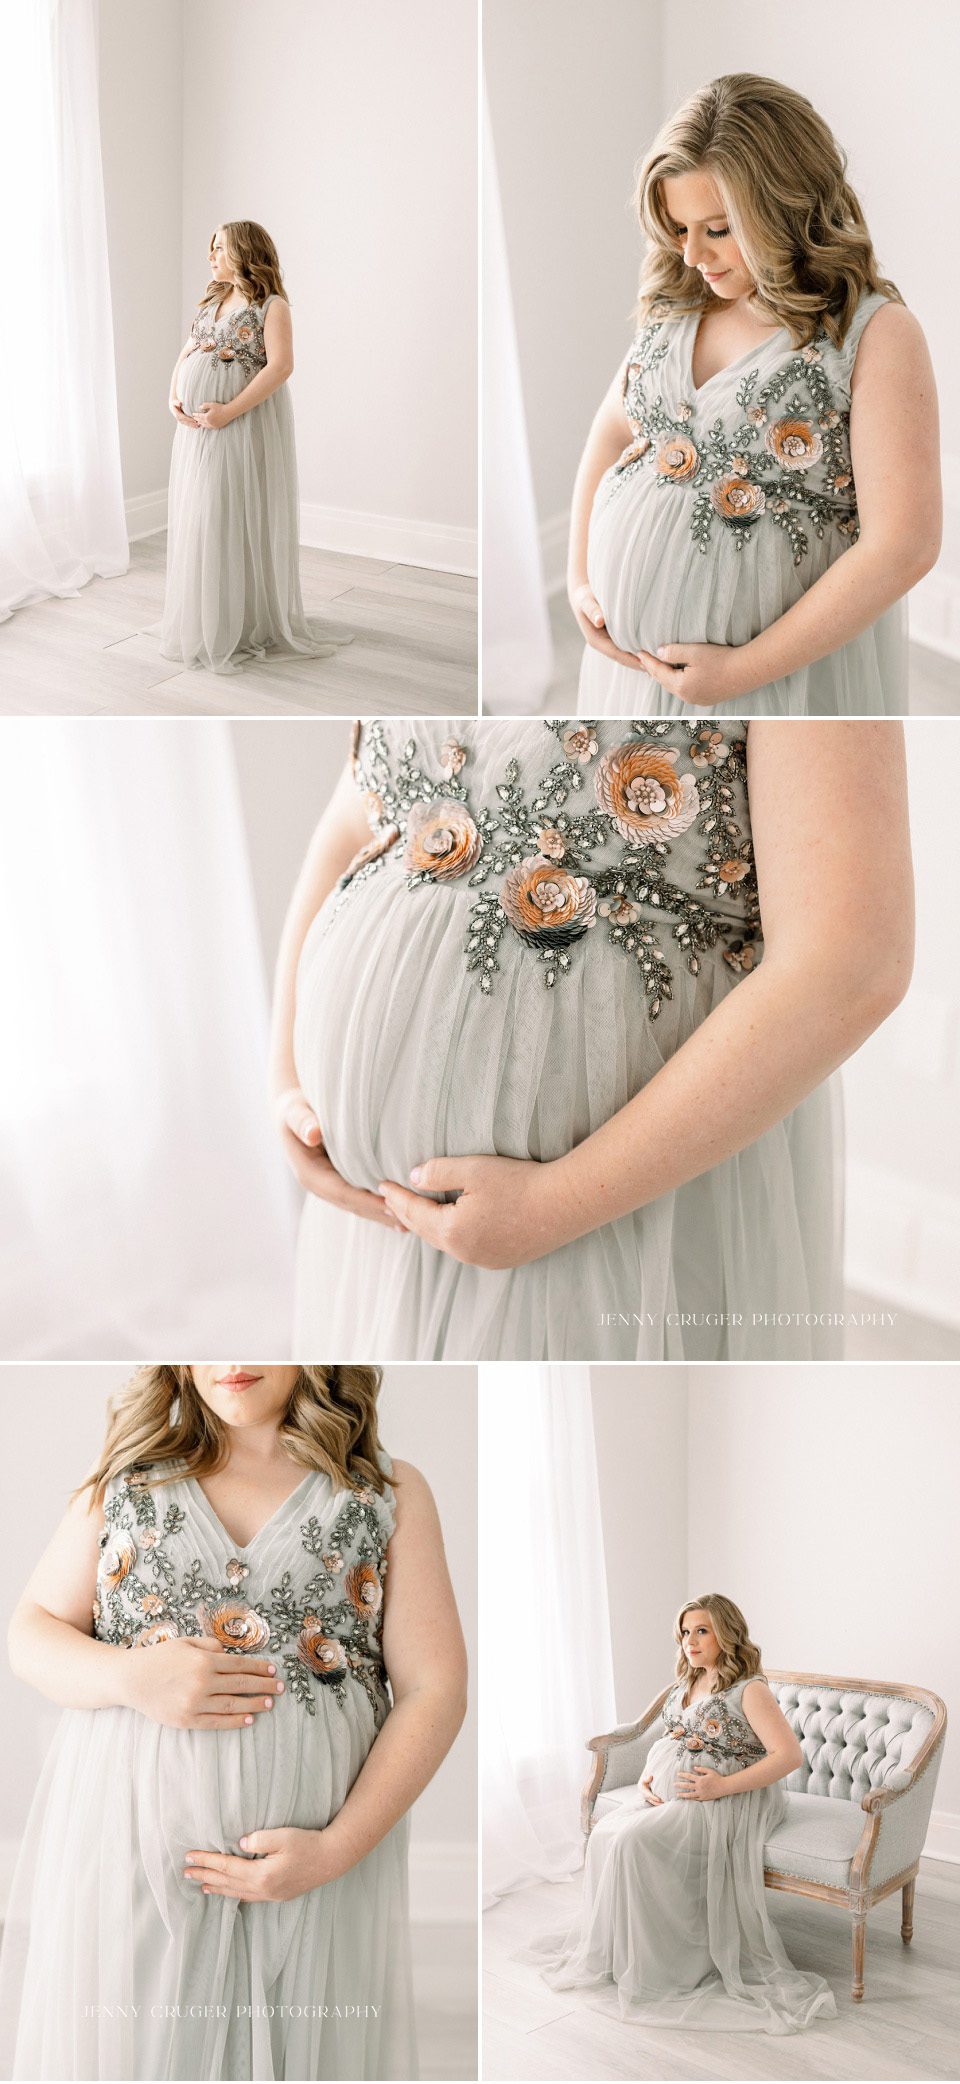 Nashville maternity photography 